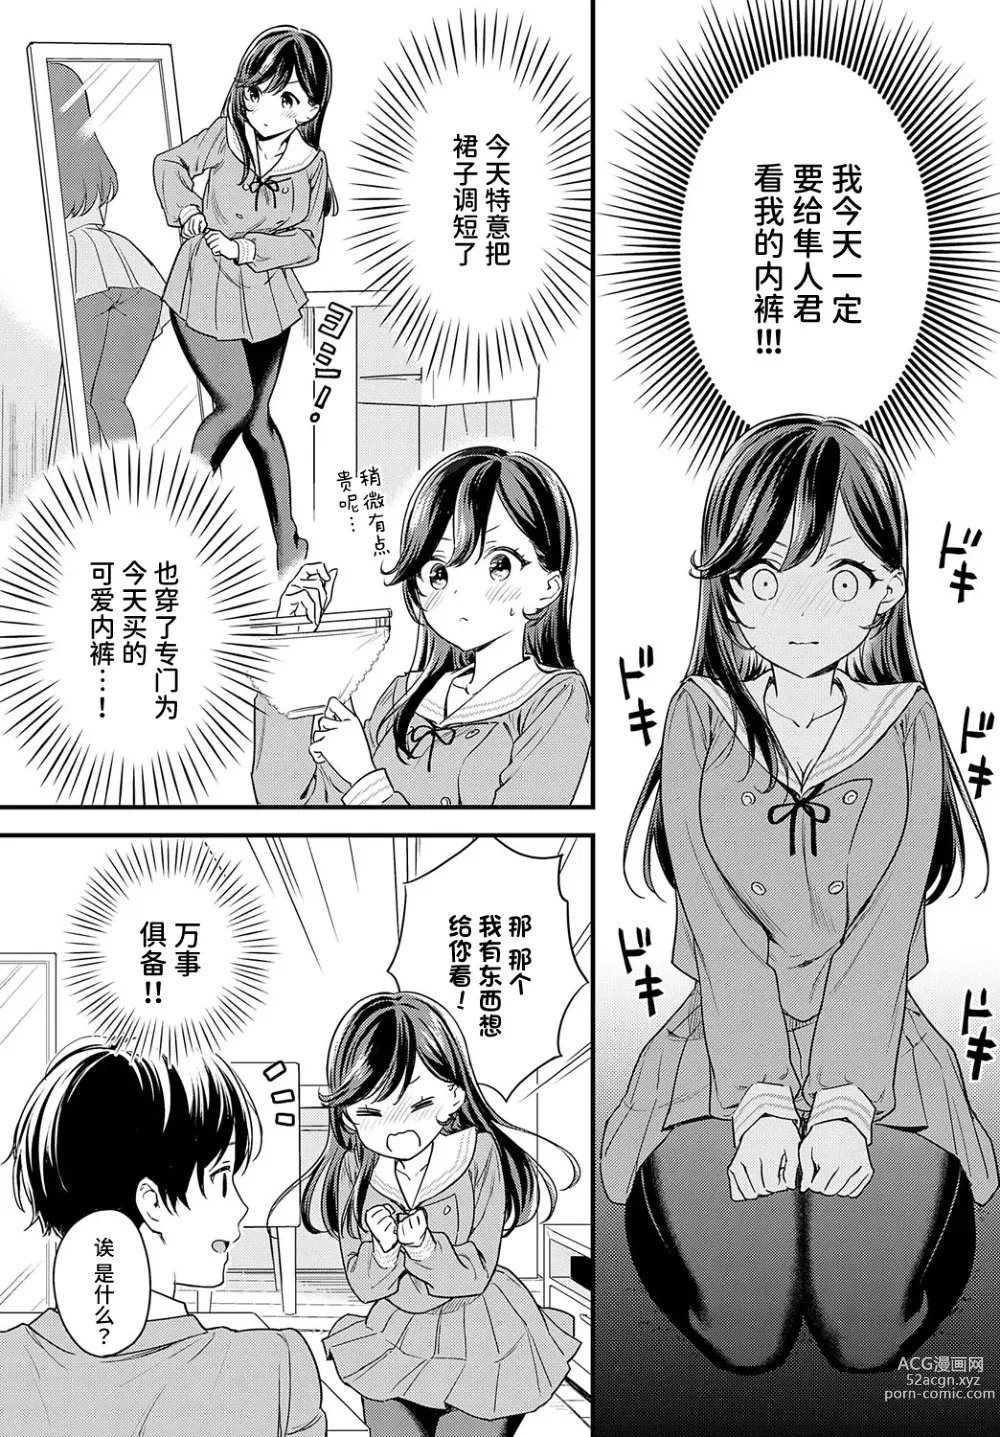 Page 5 of manga Anohi kimi ga ittakara